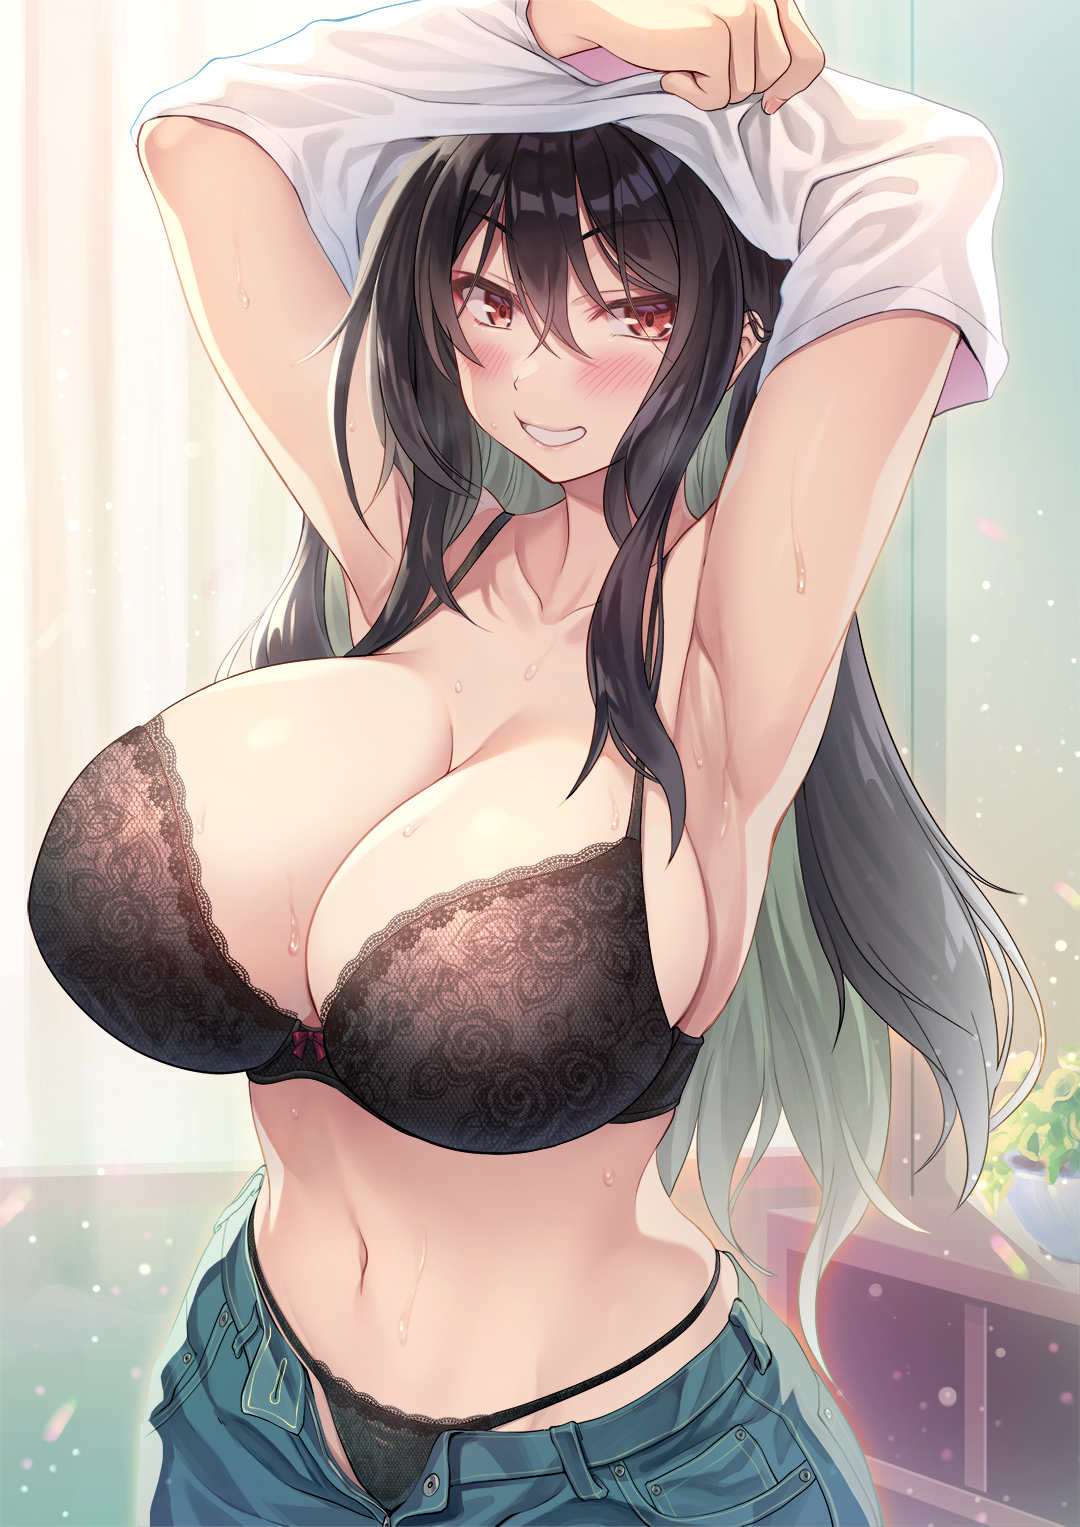 Anime 1080x1527 anime anime girls portrait display artwork huge breasts Himamo (artist) cleavage underwear undressing dark hair brown eyes blushing smiling